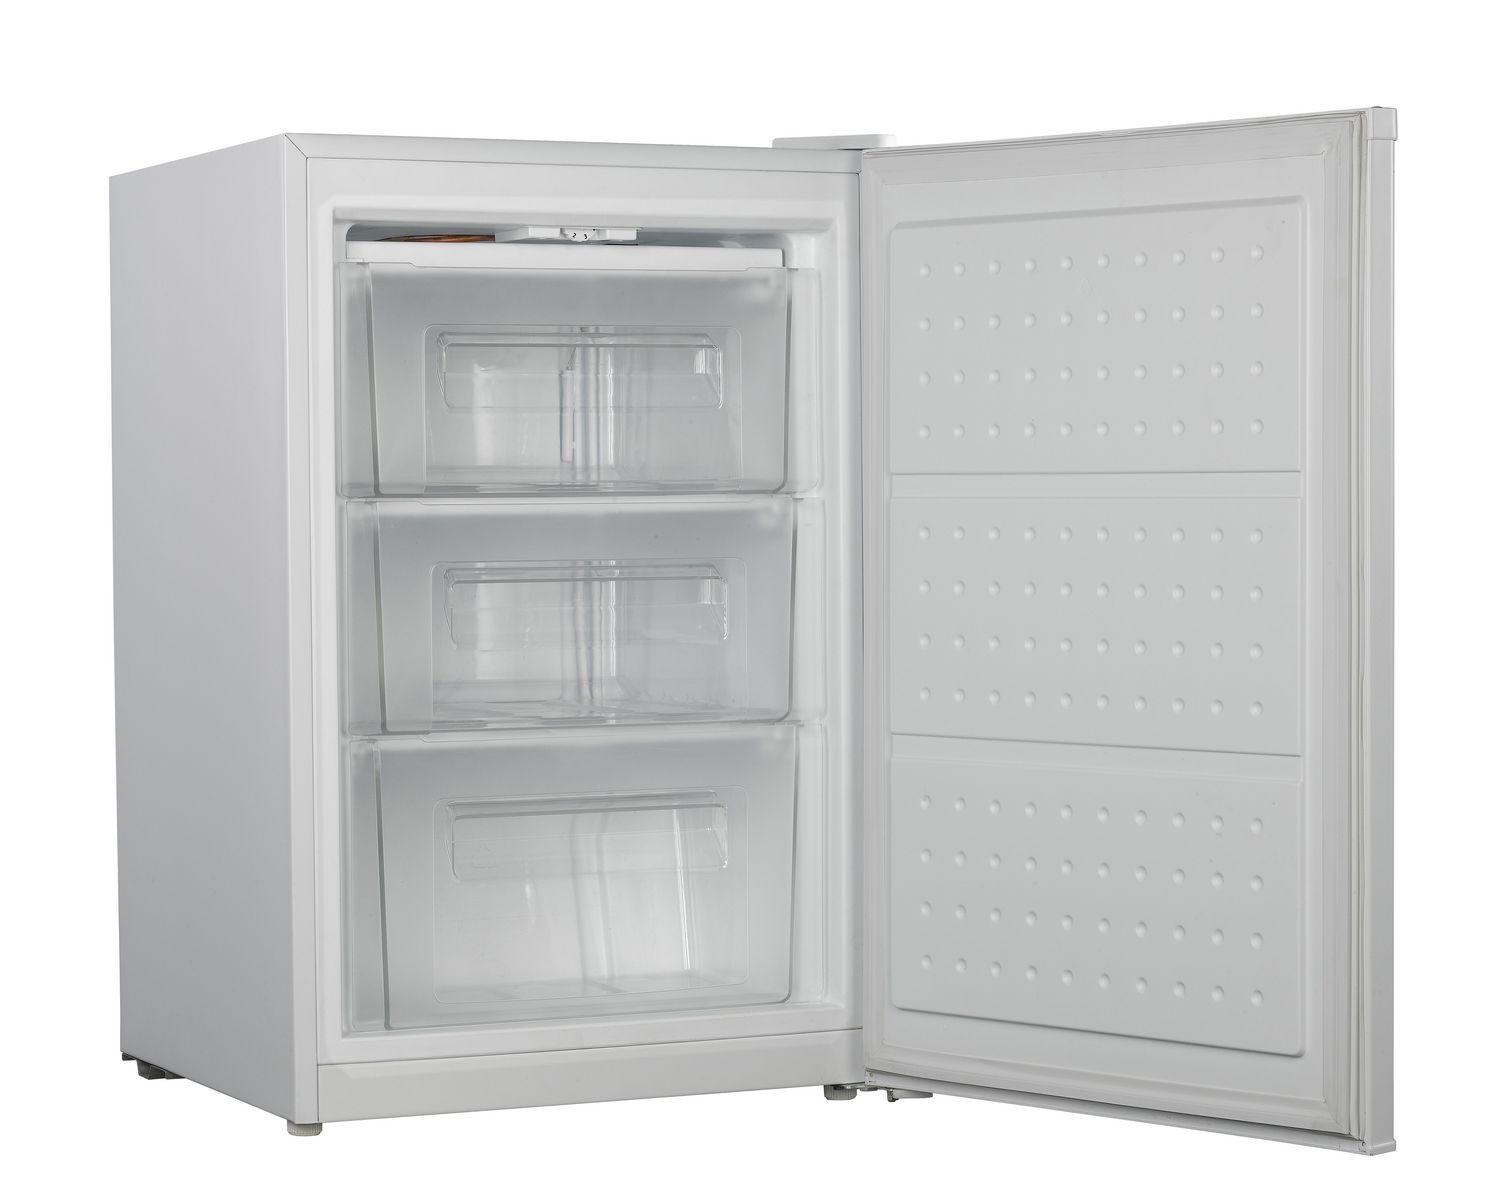 Galanz Upright Freezer Single Door Fridge with Mechanical Temperature Control 3.1 Cu.Ft White 